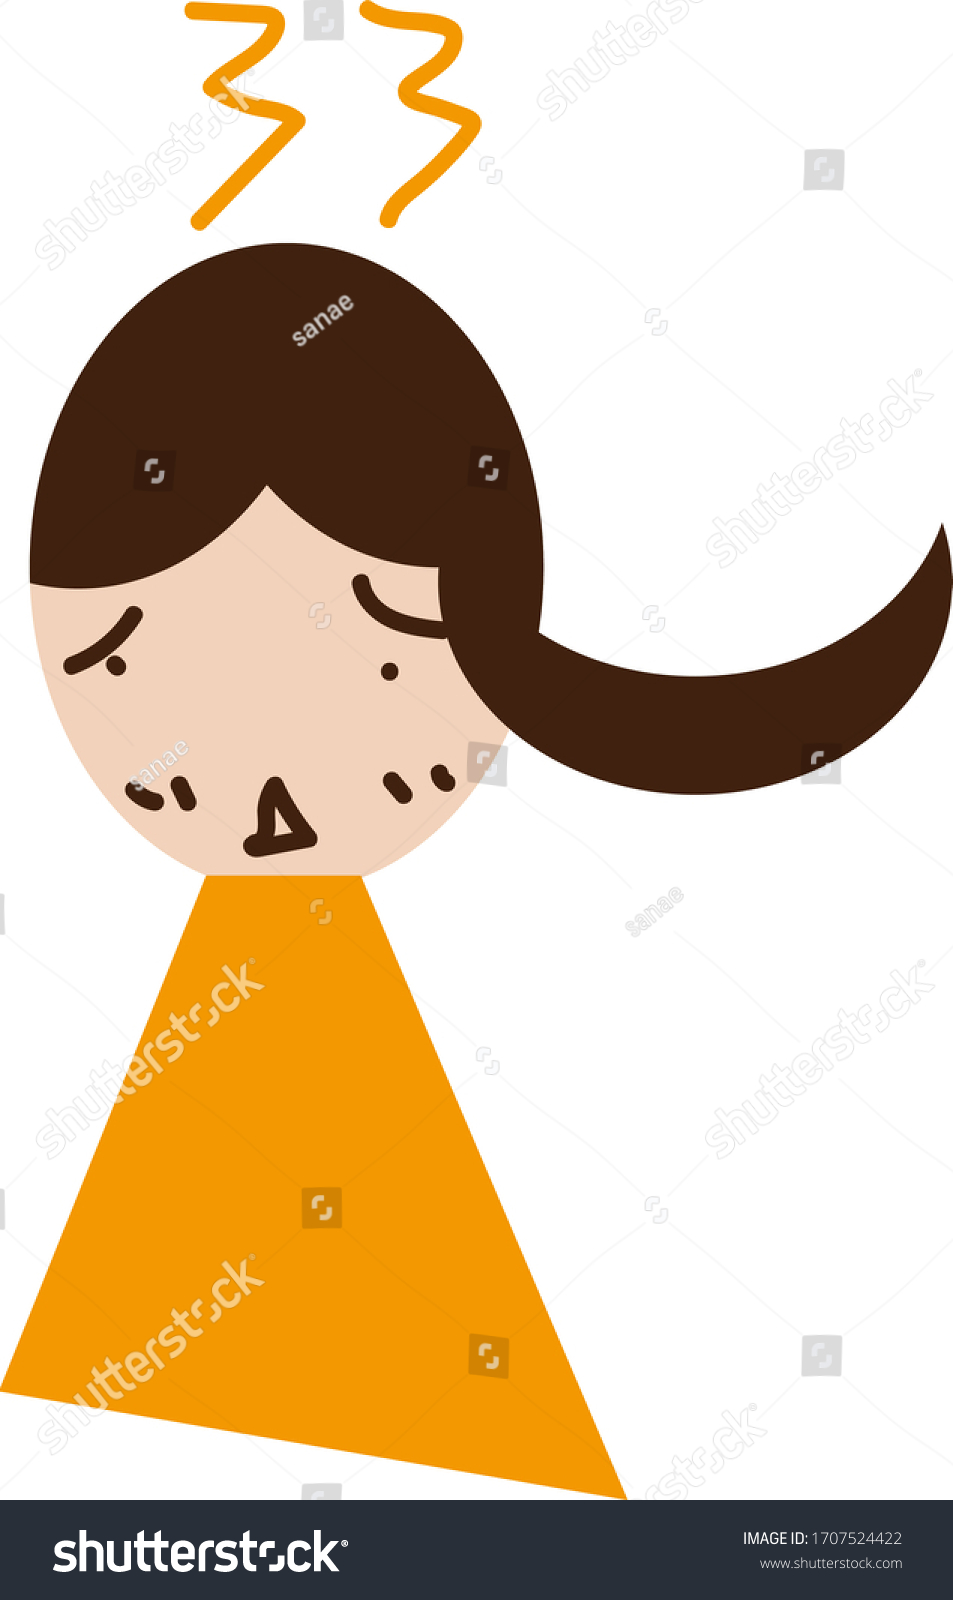 Frustrated Woman Cartoon Character Illustration Stock Illustration 1707524422 Shutterstock